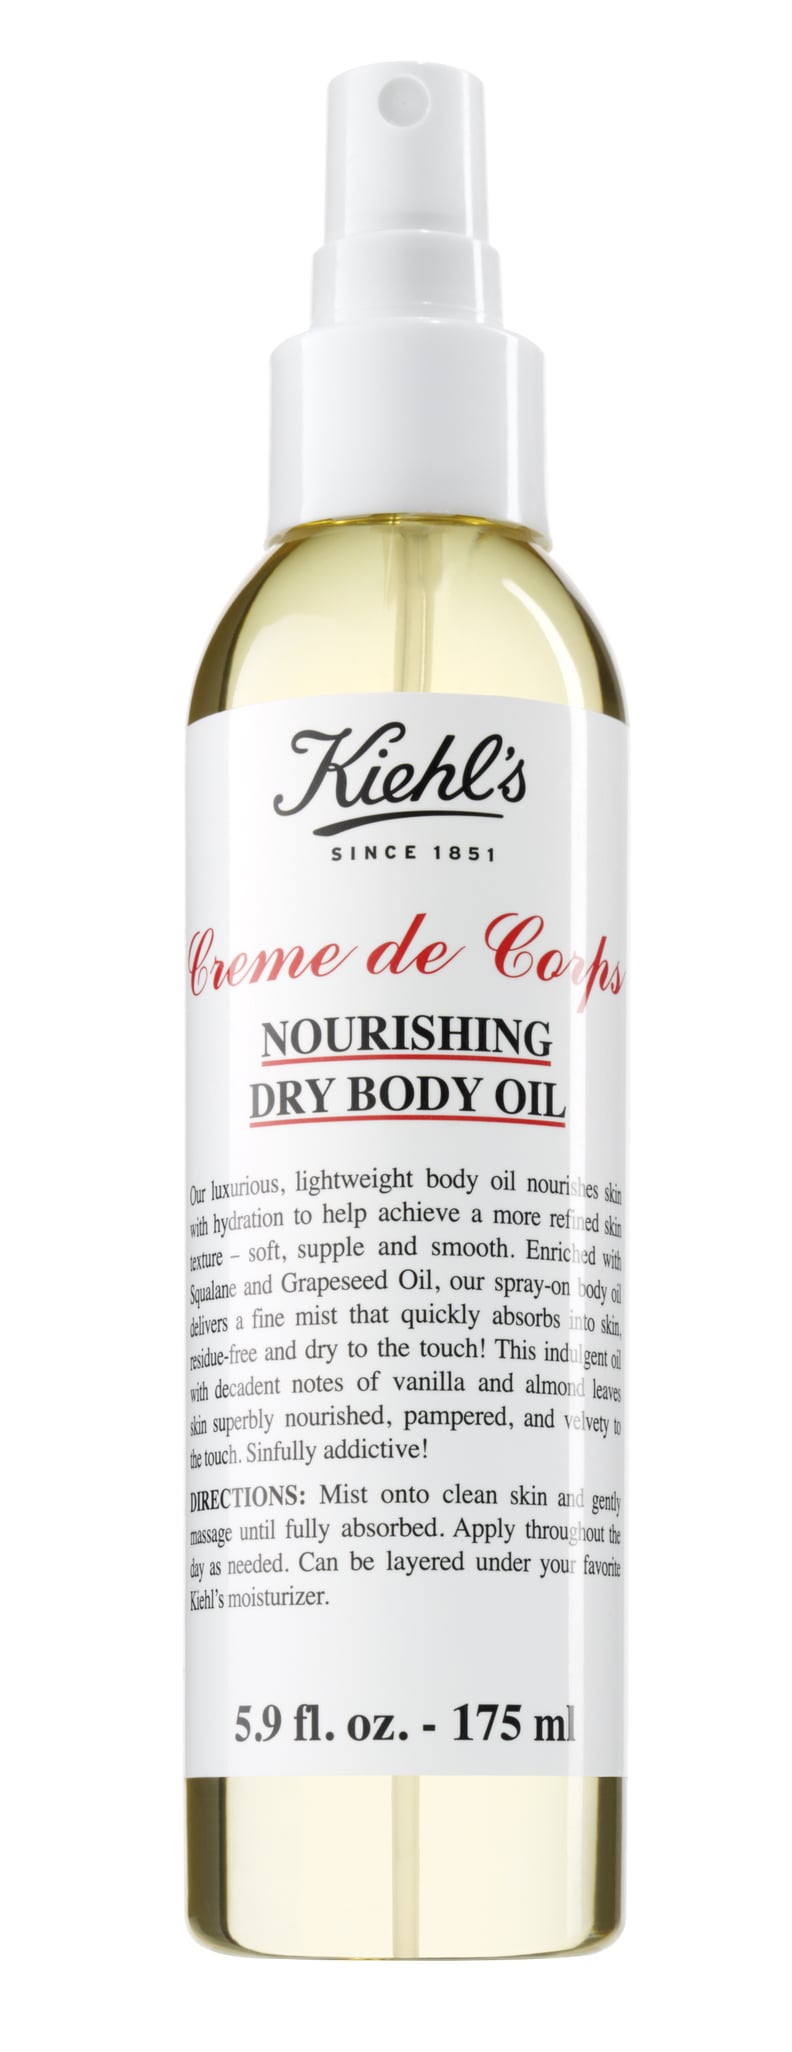 Kiehl's Creme de Corps Nourishing Dry Body Oil